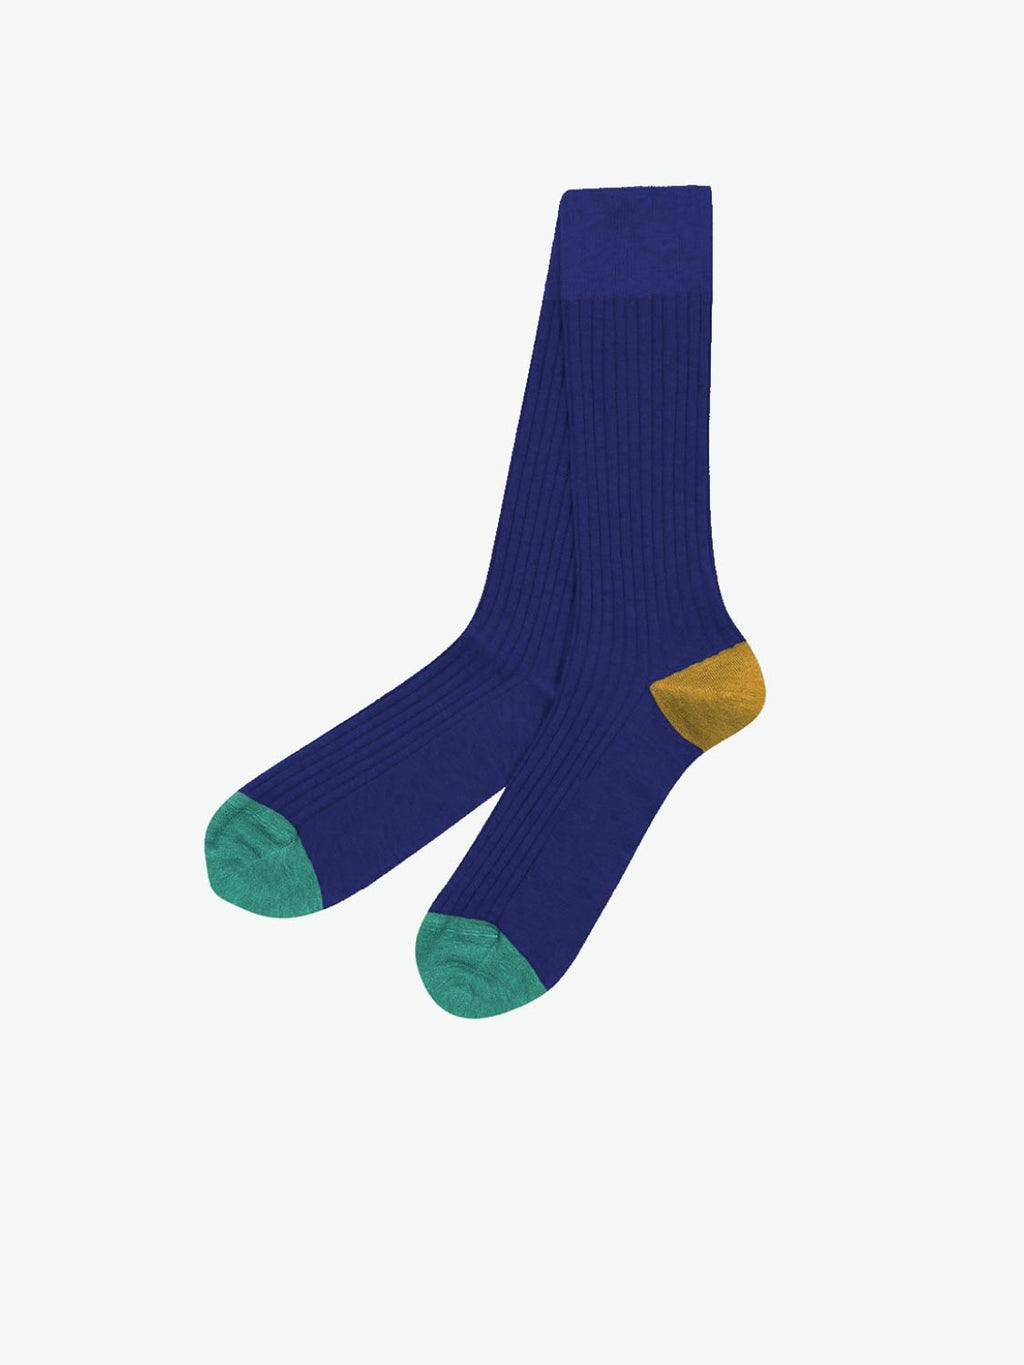 Pantherella Portobello Socks Ultramarine Blue | The Project Garments - A